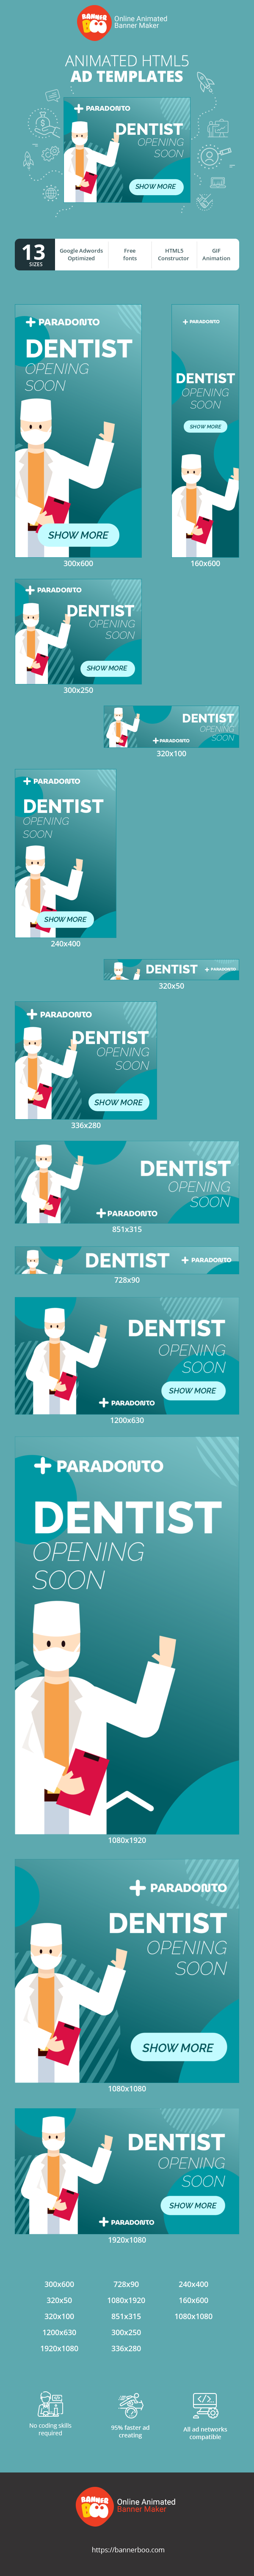 Шаблон рекламного банера — Dentist — Opening Soon